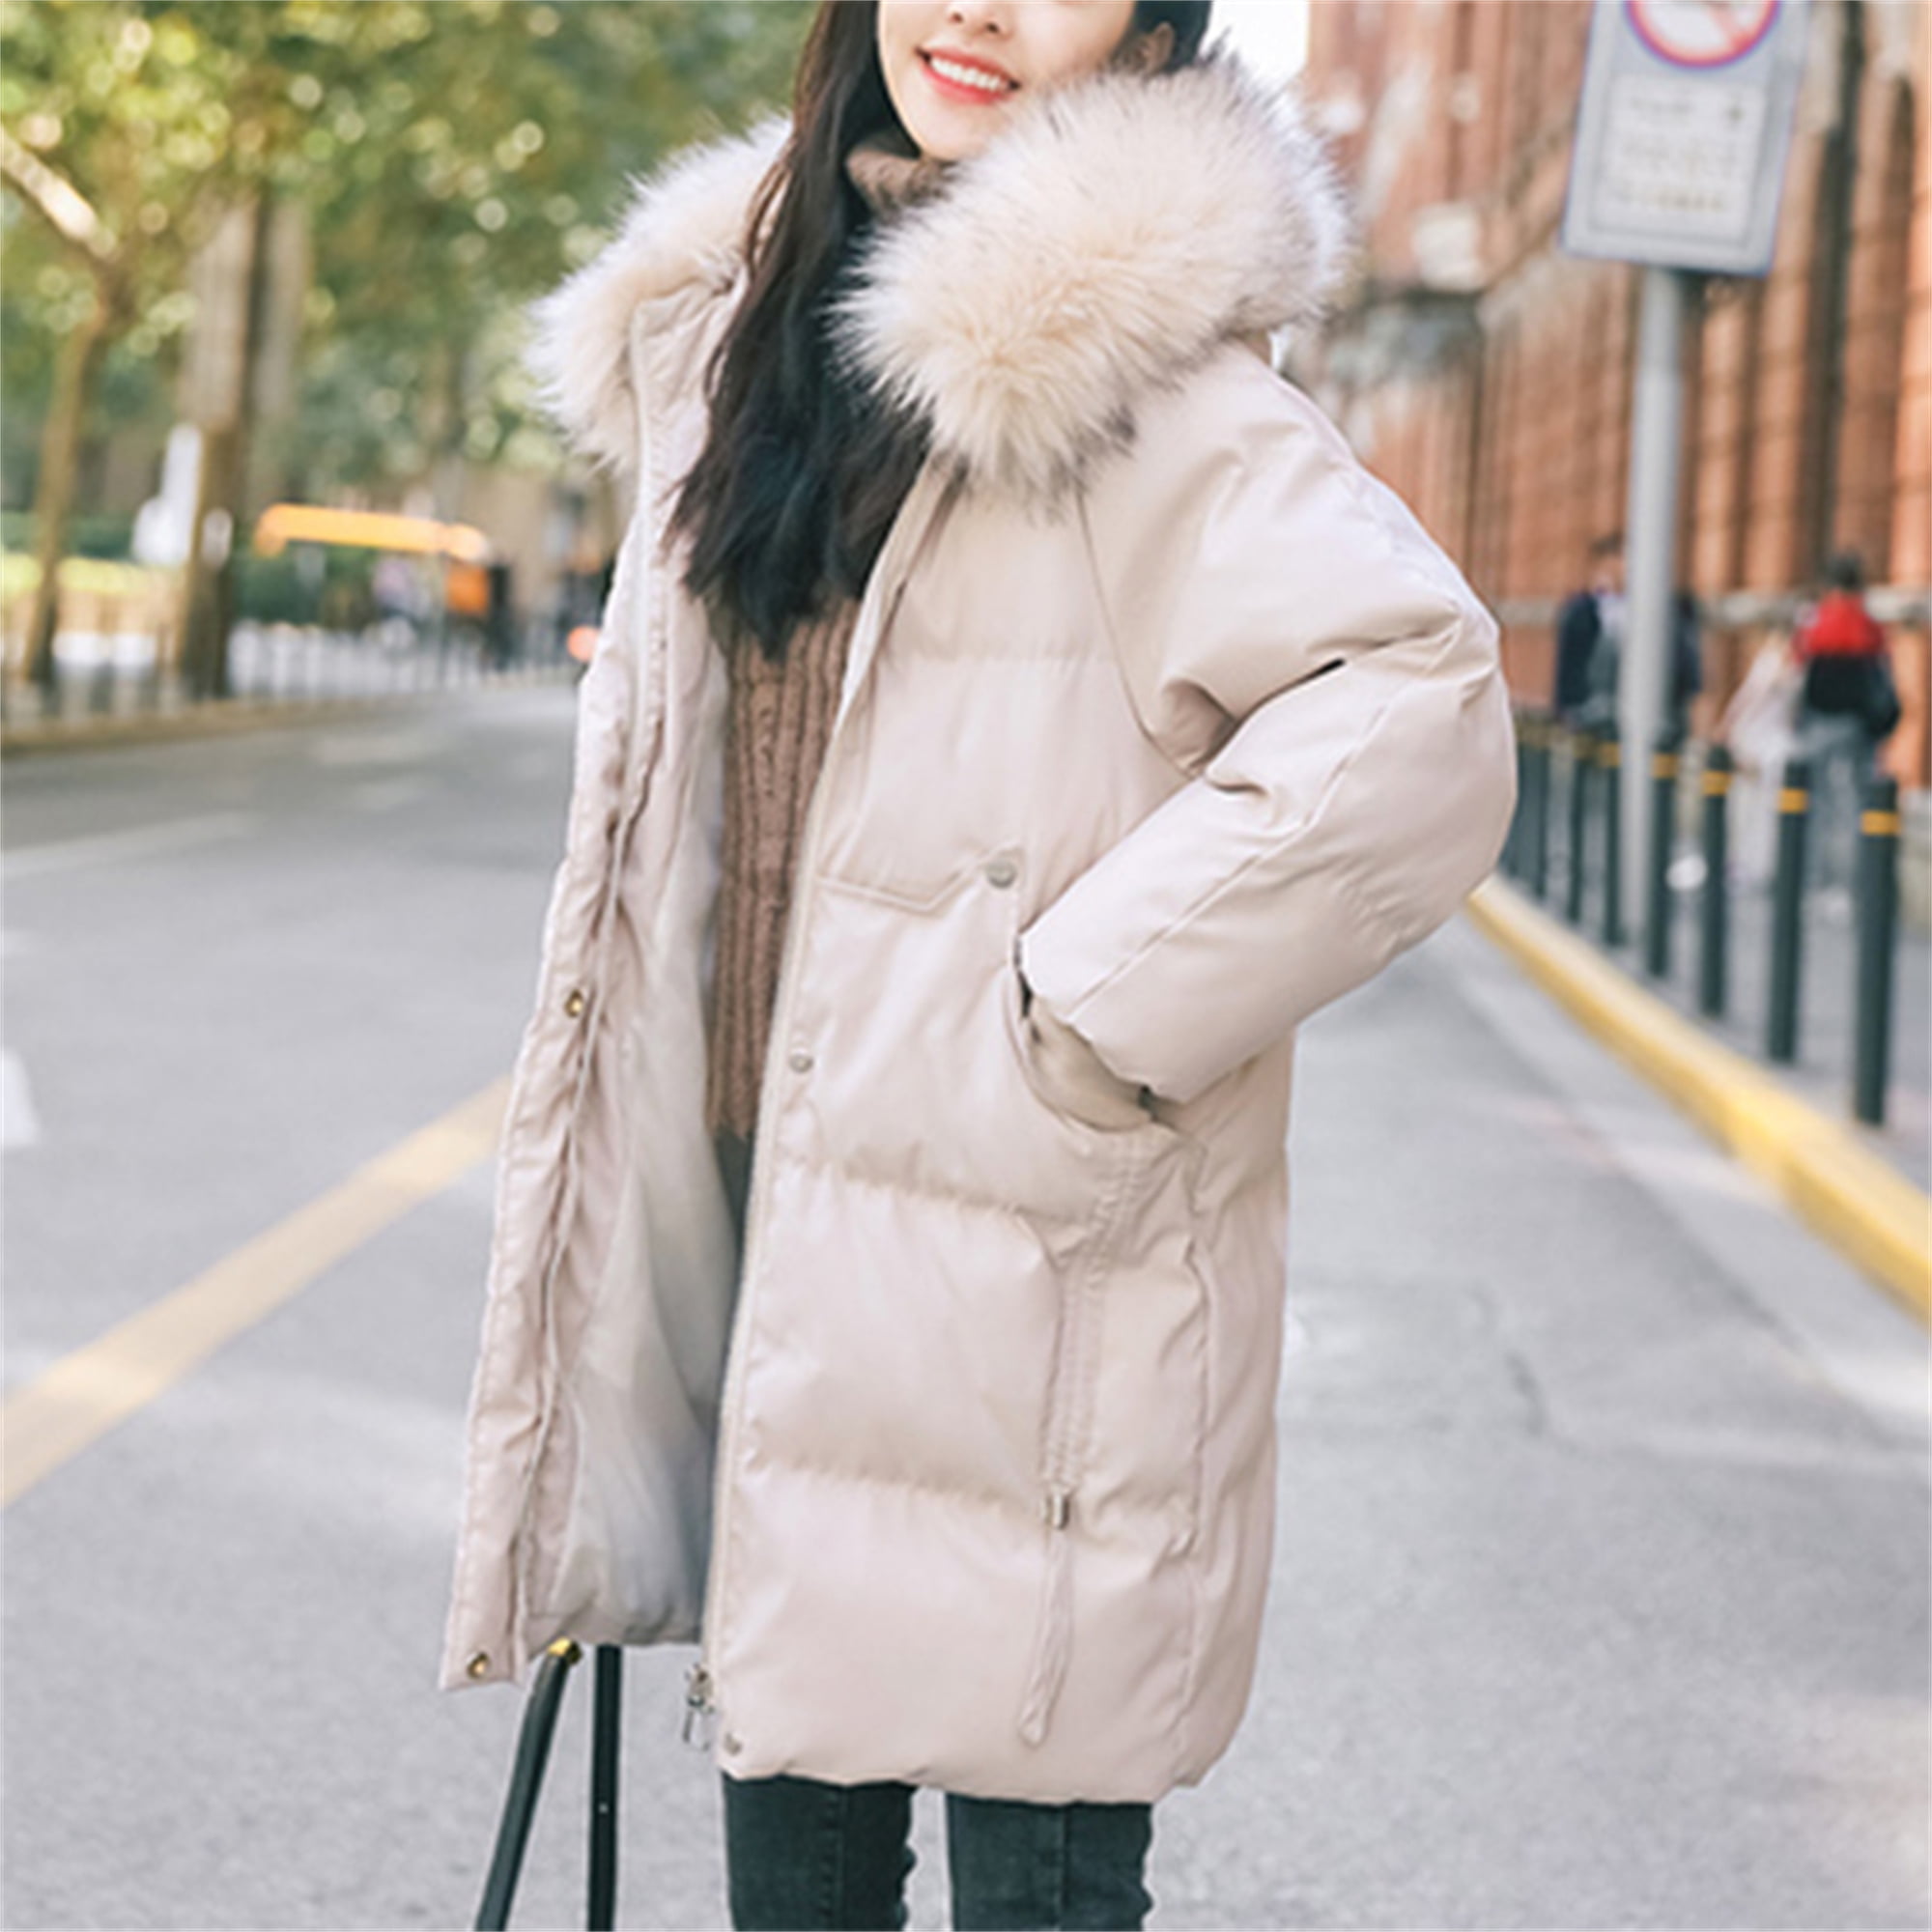 Korean Womens Fur Lining Long Jacket Denim Overcoats Thicken lamb wool Coats